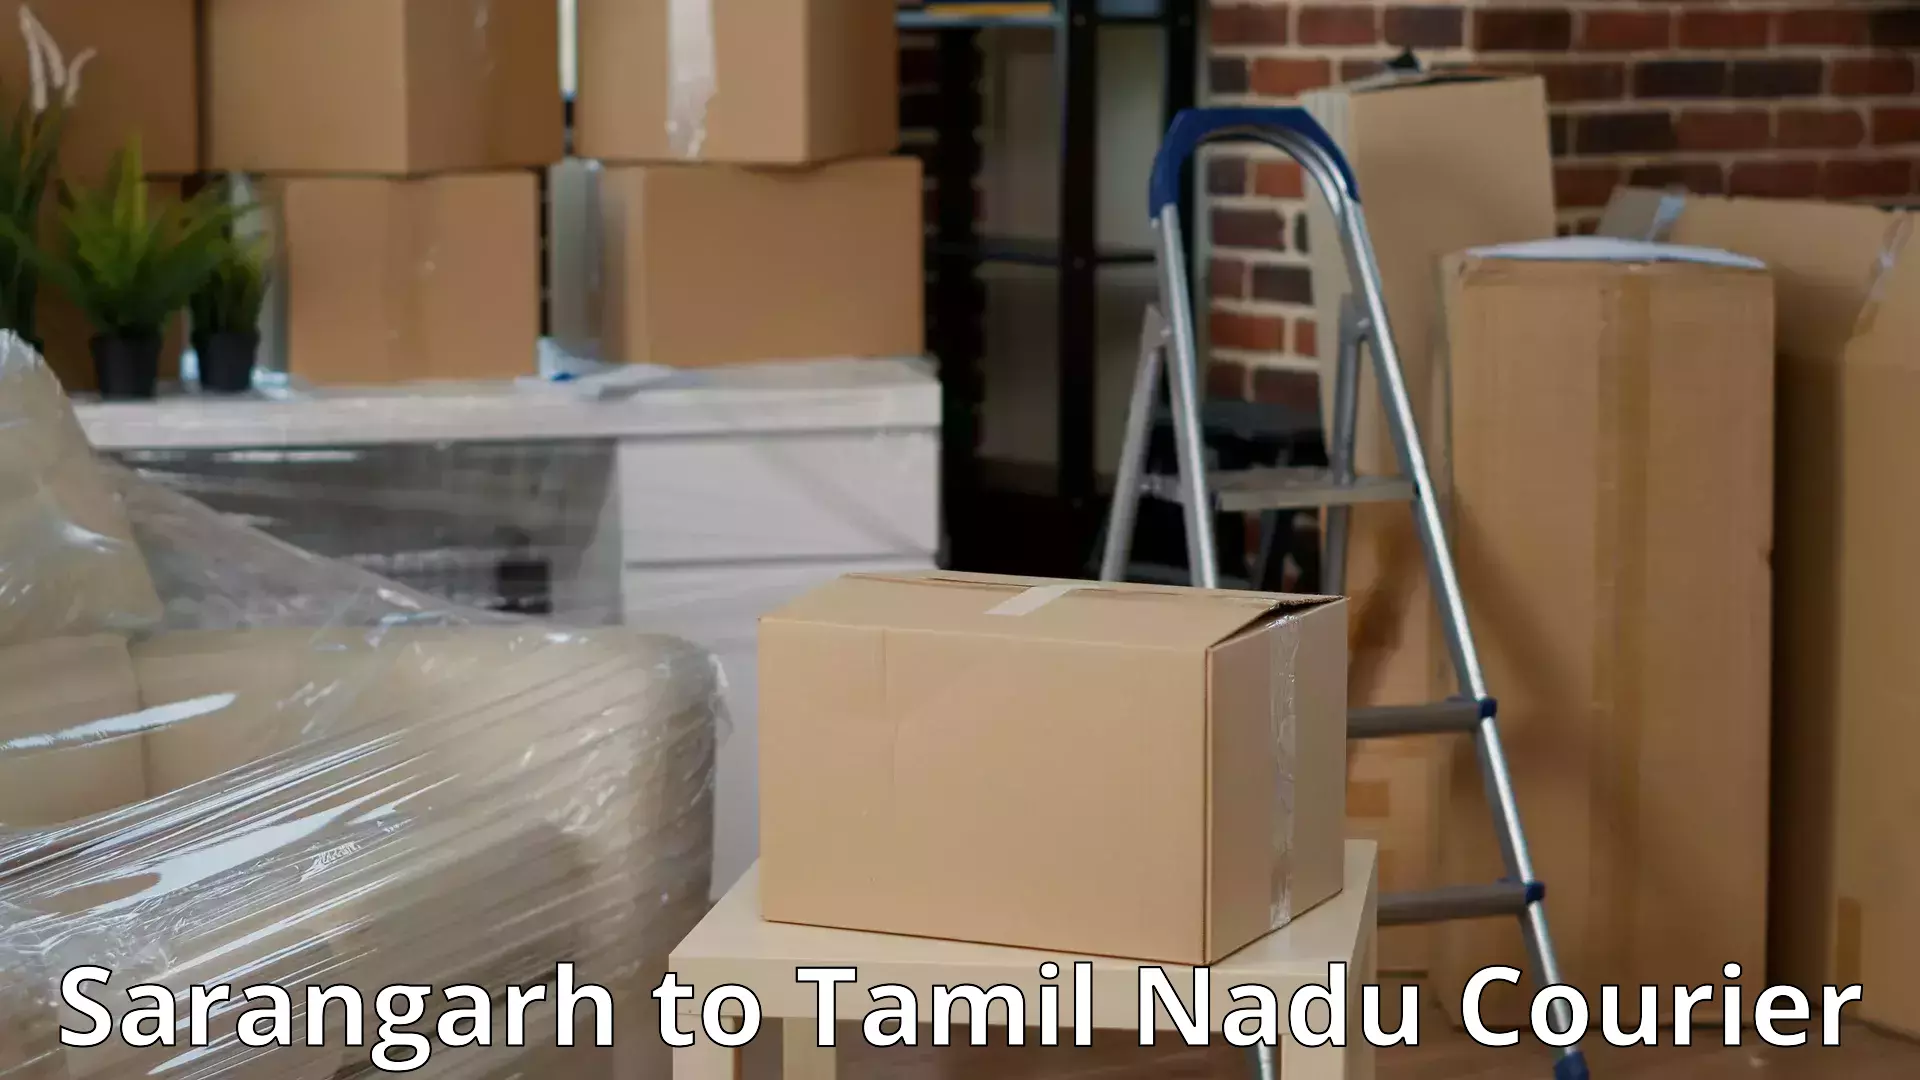 Professional furniture movers Sarangarh to Natham